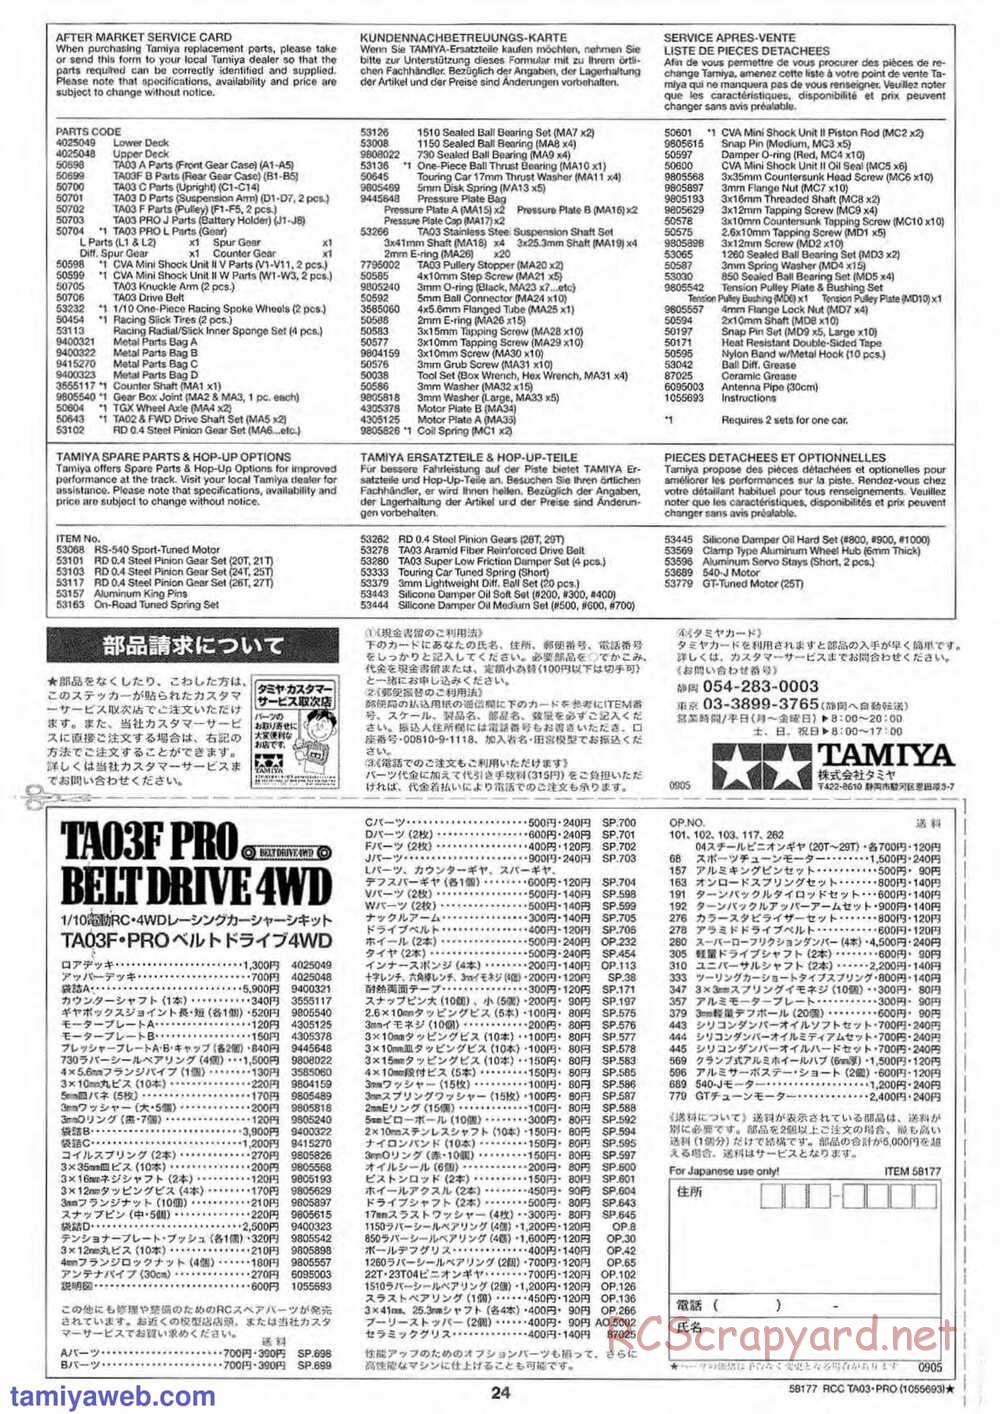 Tamiya - TA-03F Pro Chassis - Manual - Page 24